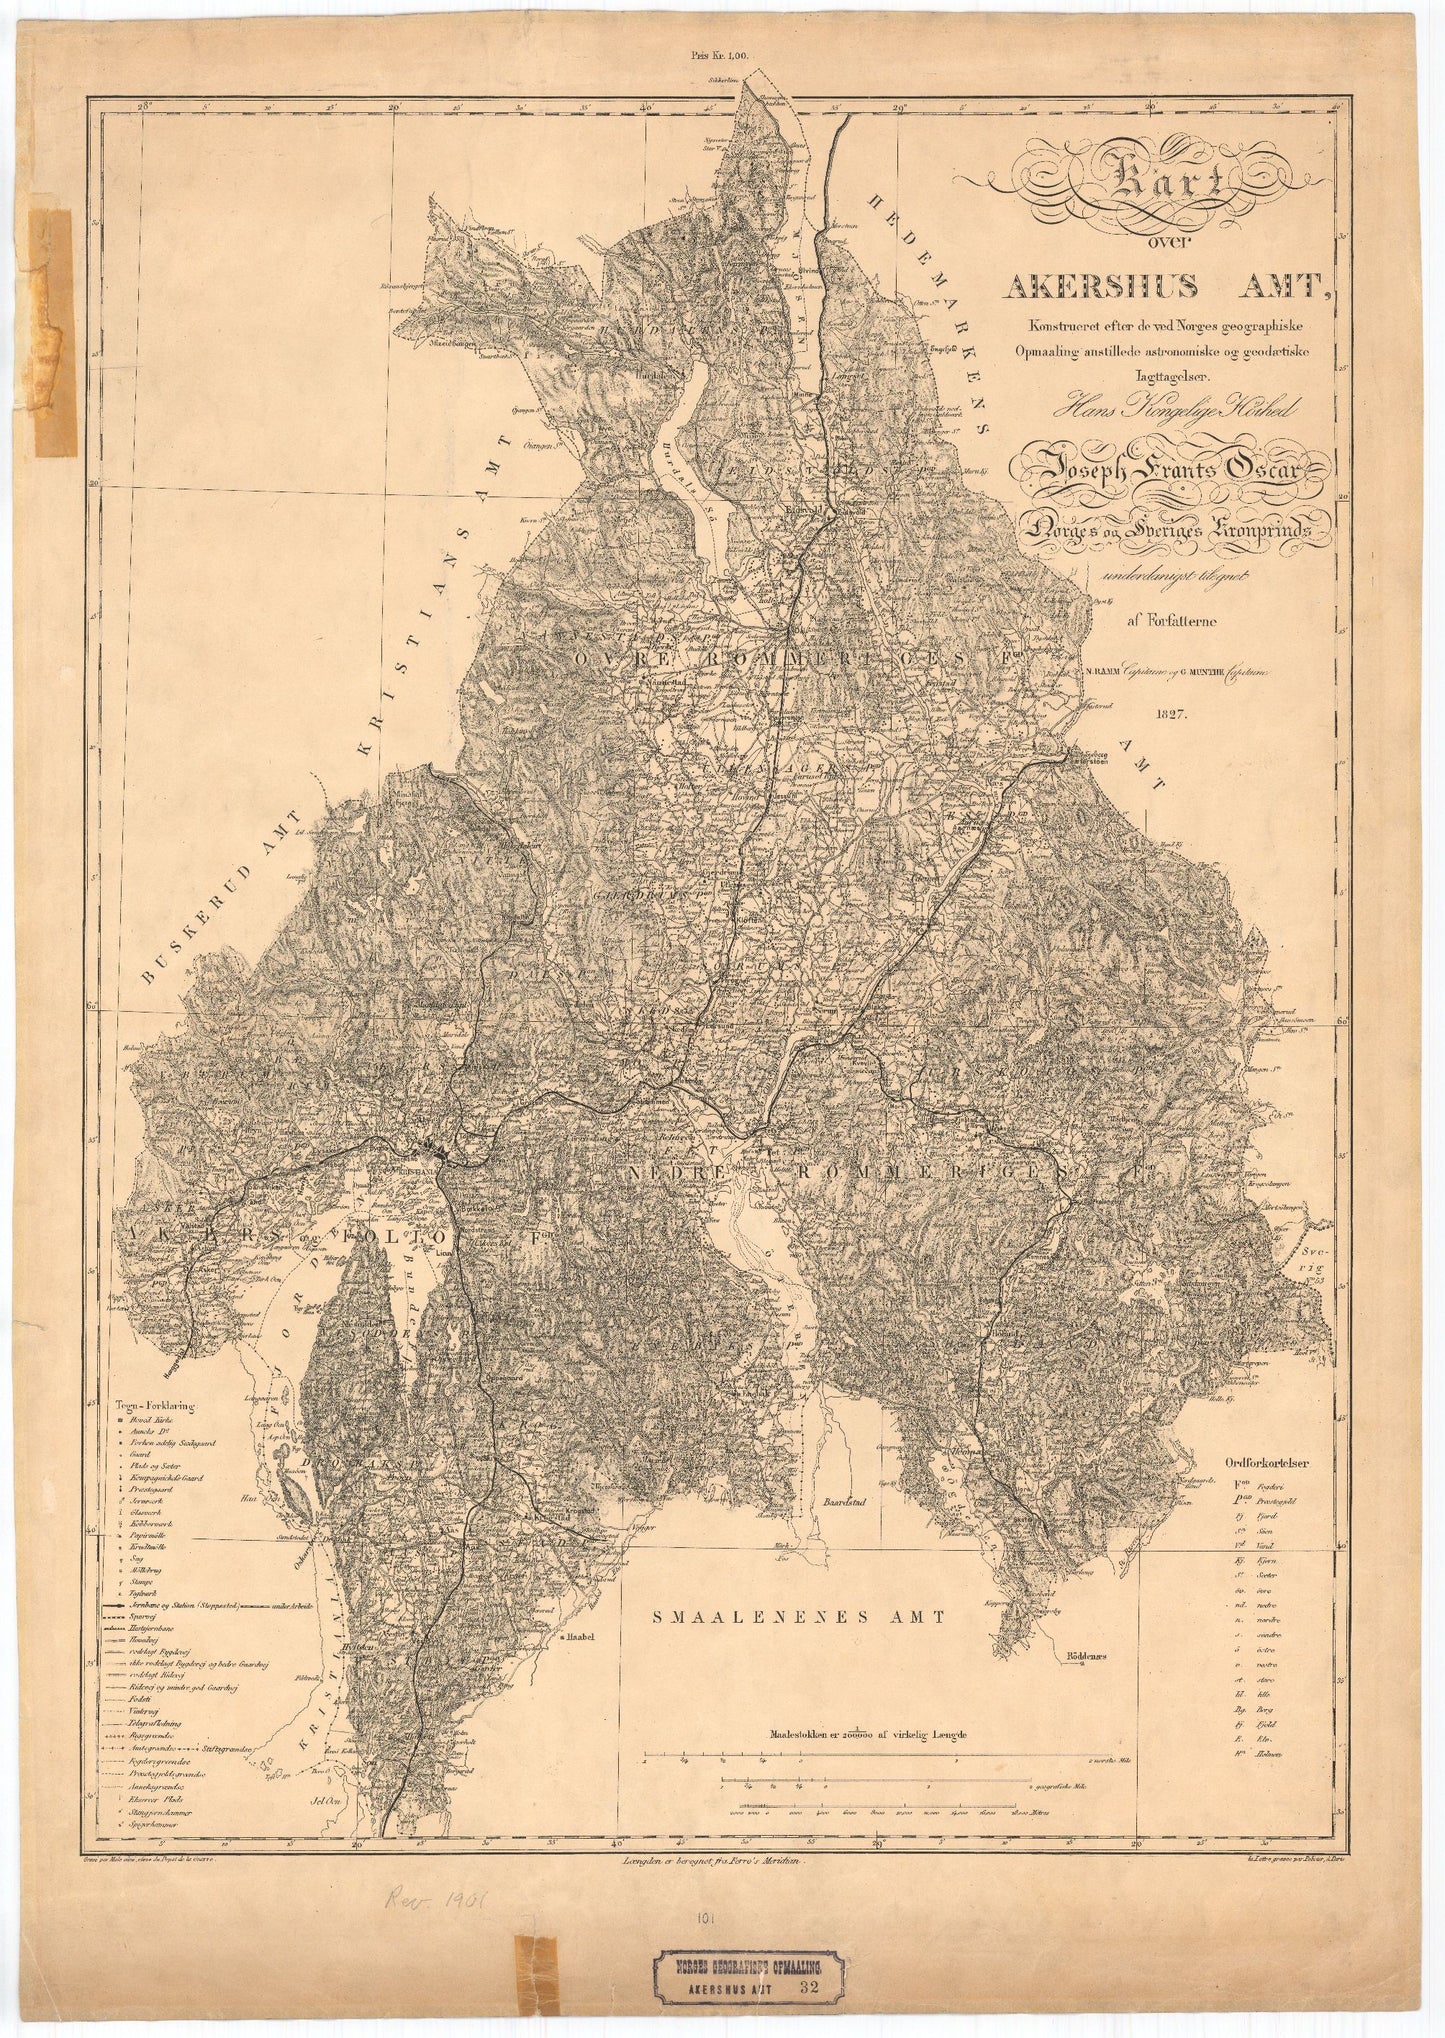 Kart over Agershuus Amt: Akershus | Oslo